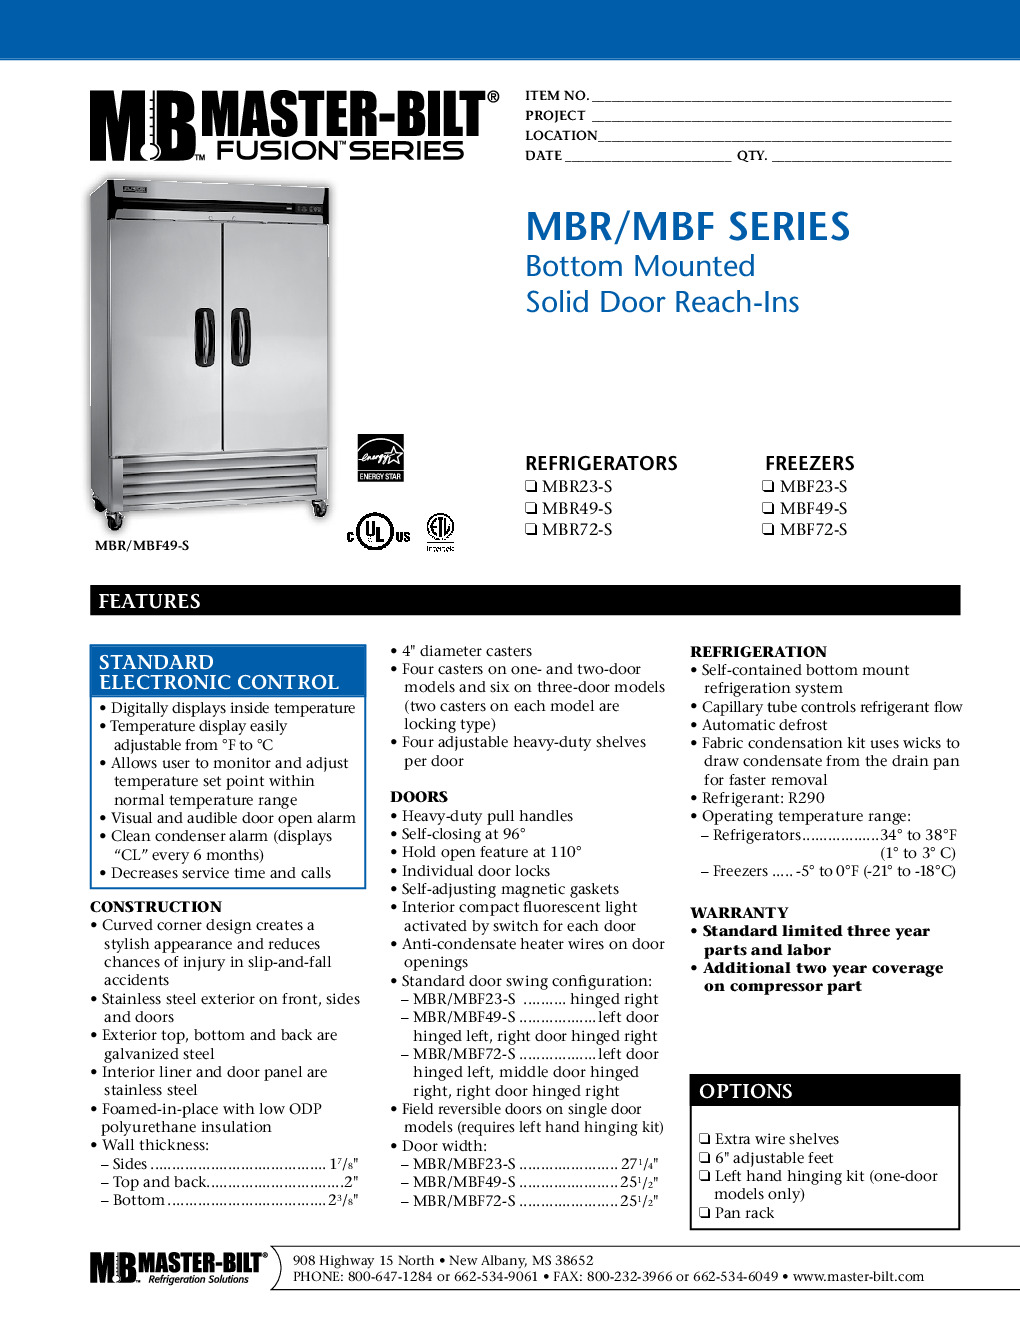 Master-Bilt MBR23-S Reach-In Refrigerator